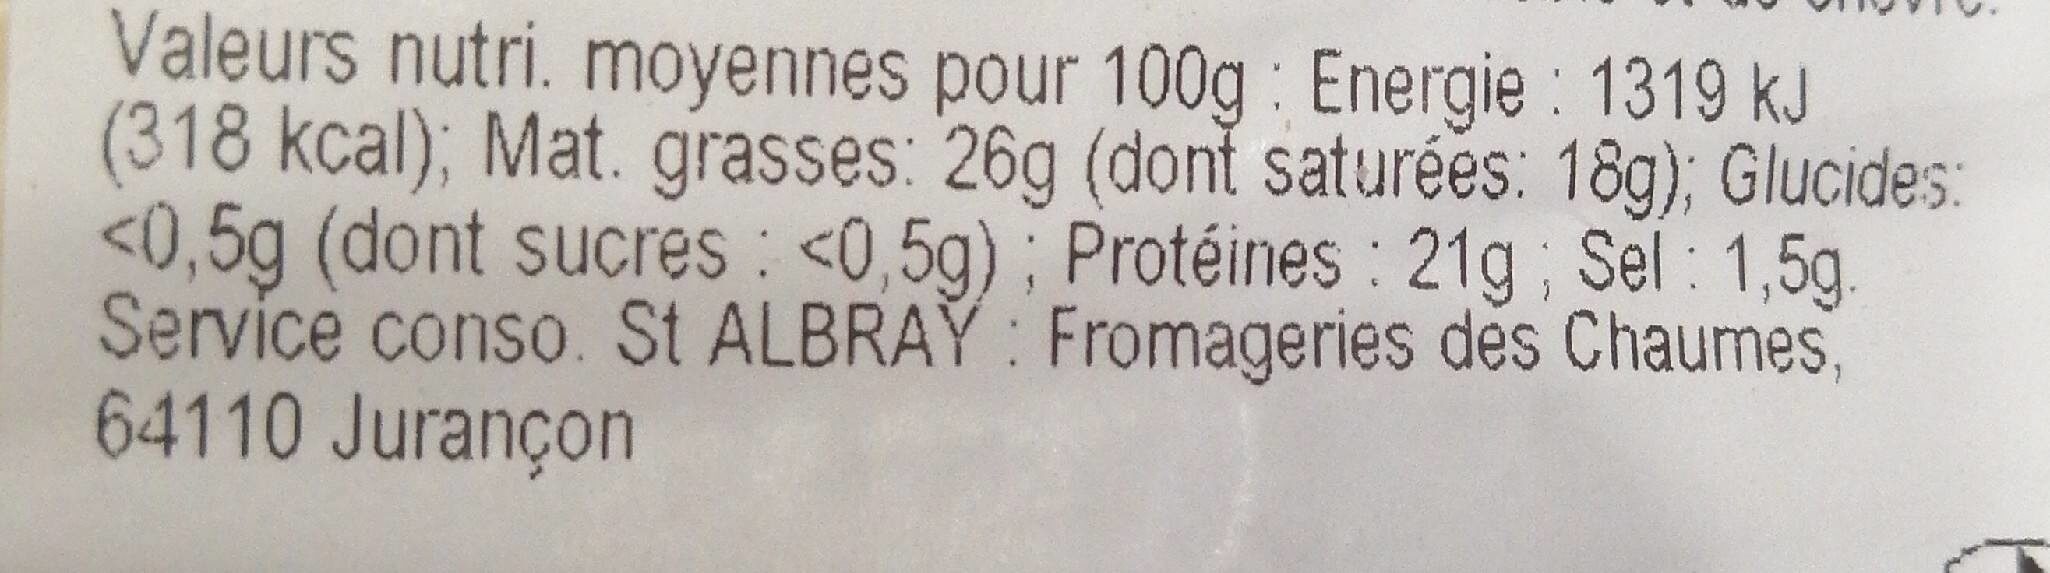 Saint Albray - Tableau nutritionnel